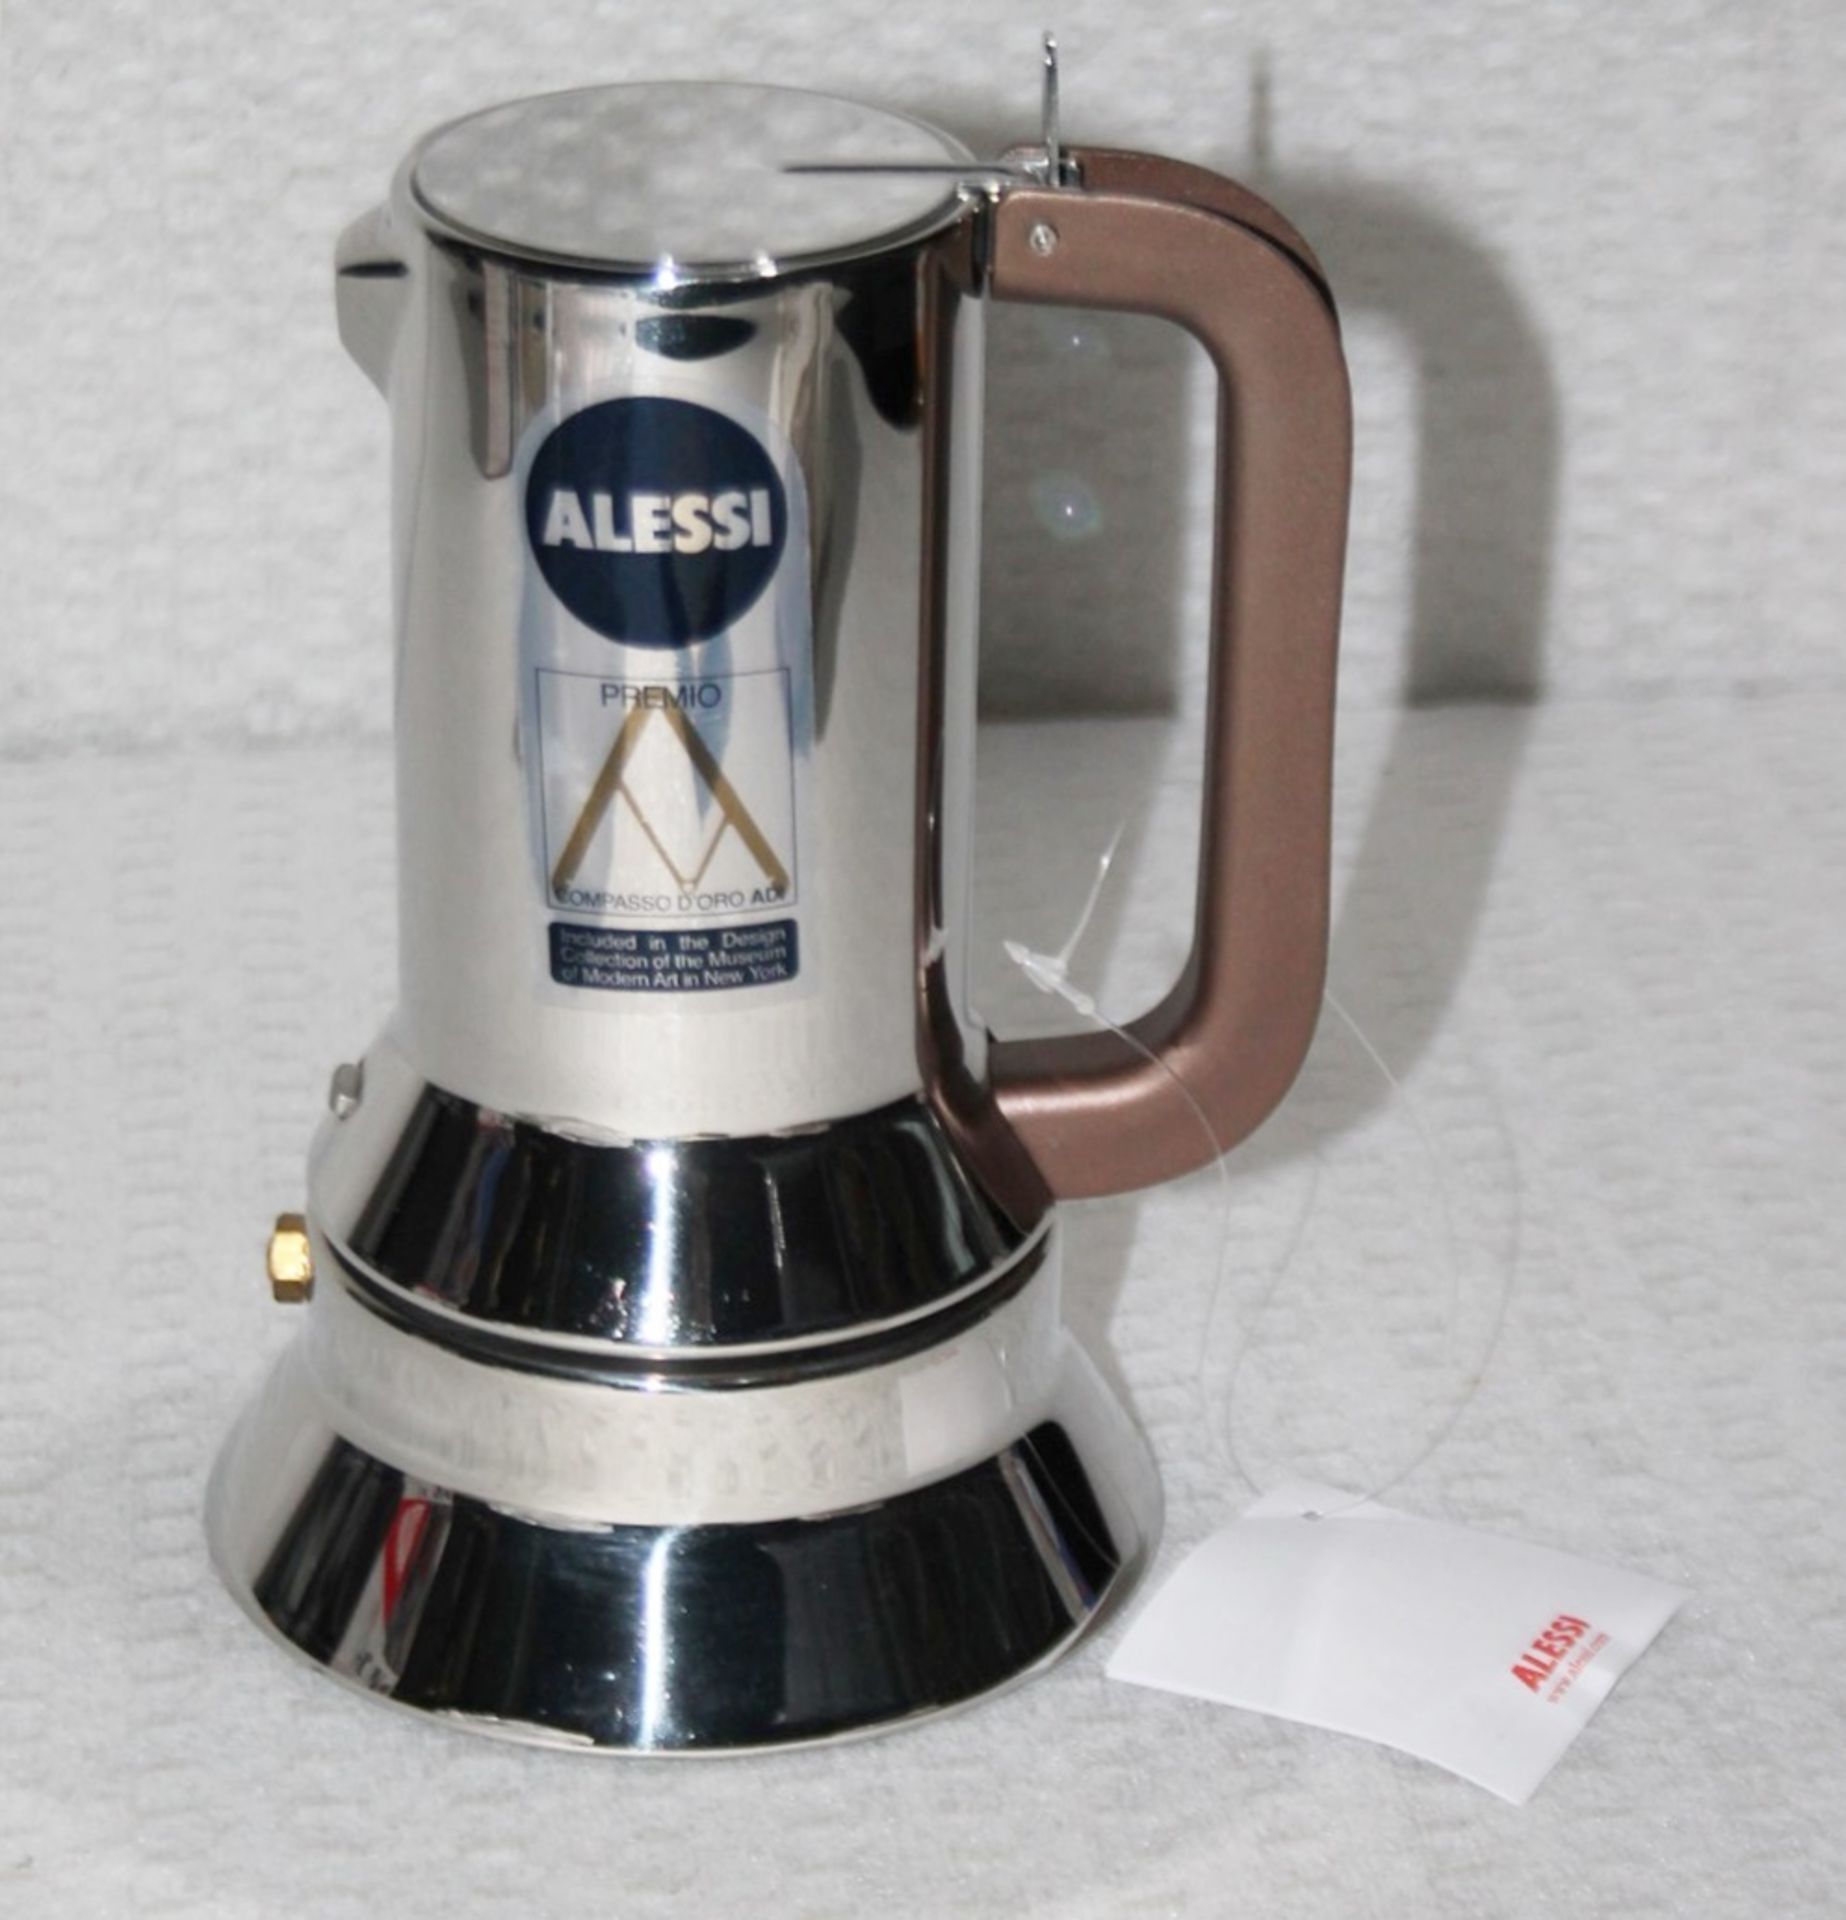 1 x ALESSI 9090 Espresso Coffee Maker - Dimensions: 17.5cm x 11cm approx - Original Price £135. - Image 2 of 7